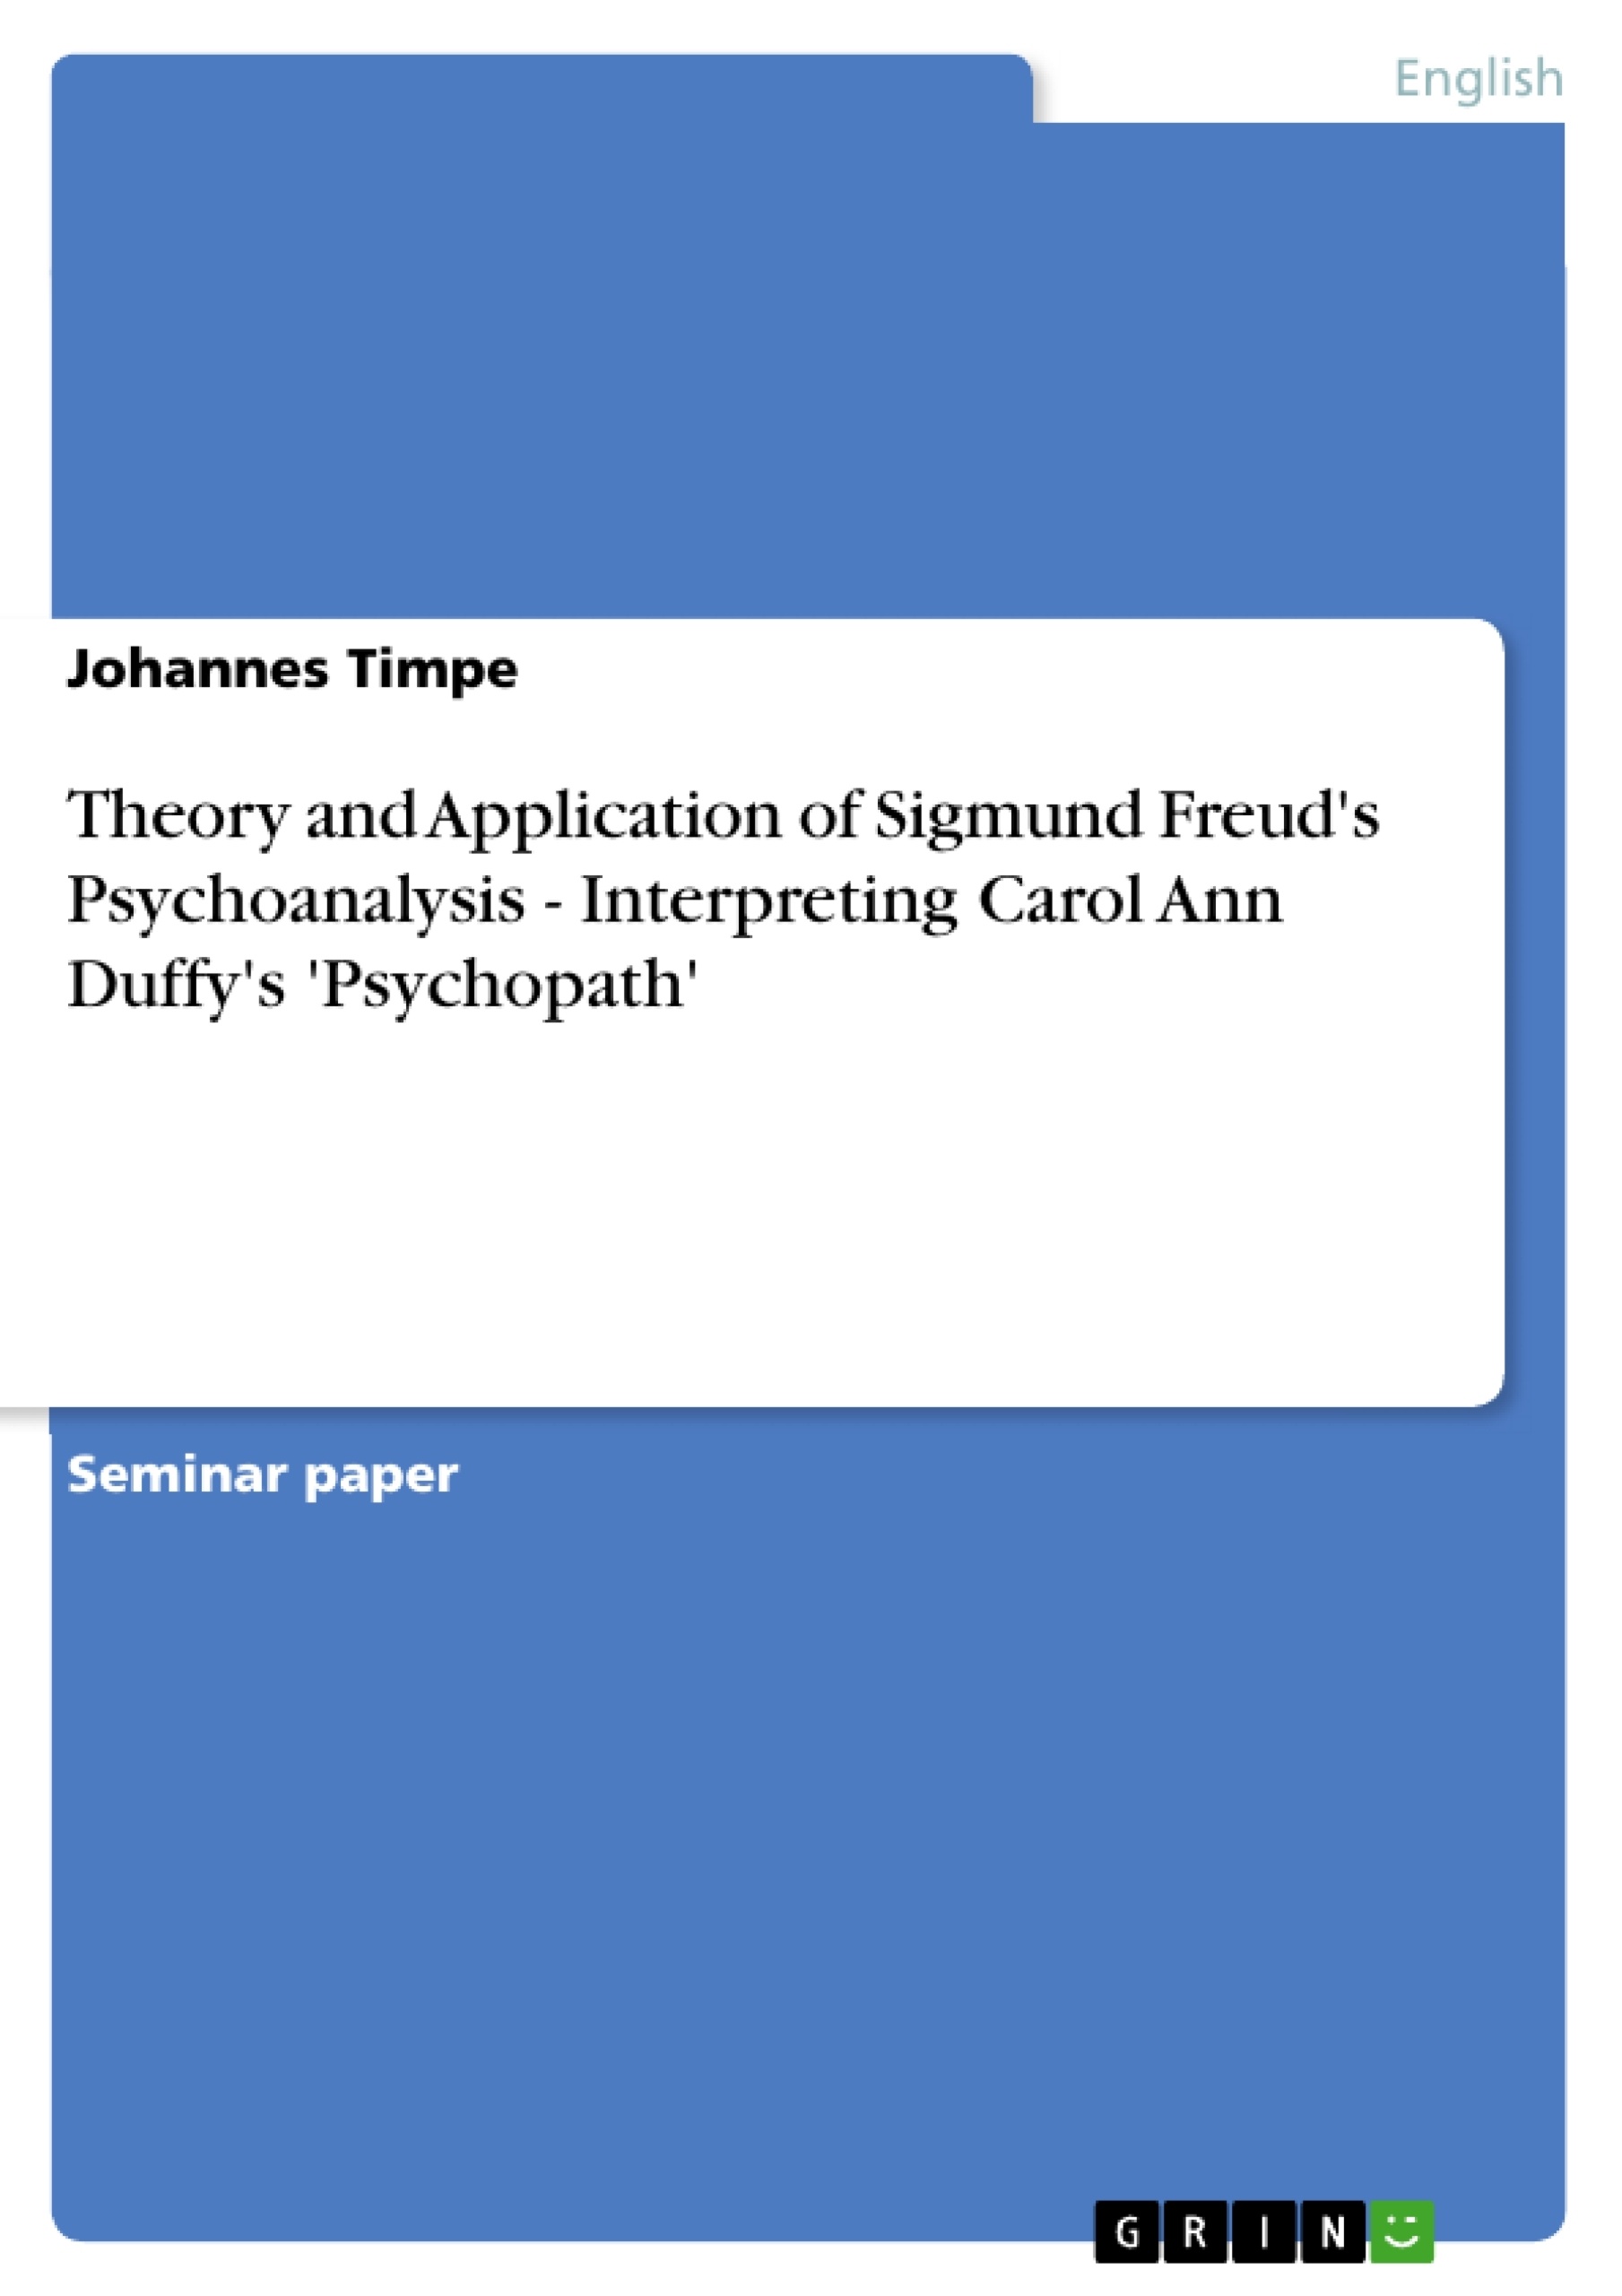 Title: Theory and Application of Sigmund Freud's Psychoanalysis - Interpreting Carol Ann Duffy's 'Psychopath'